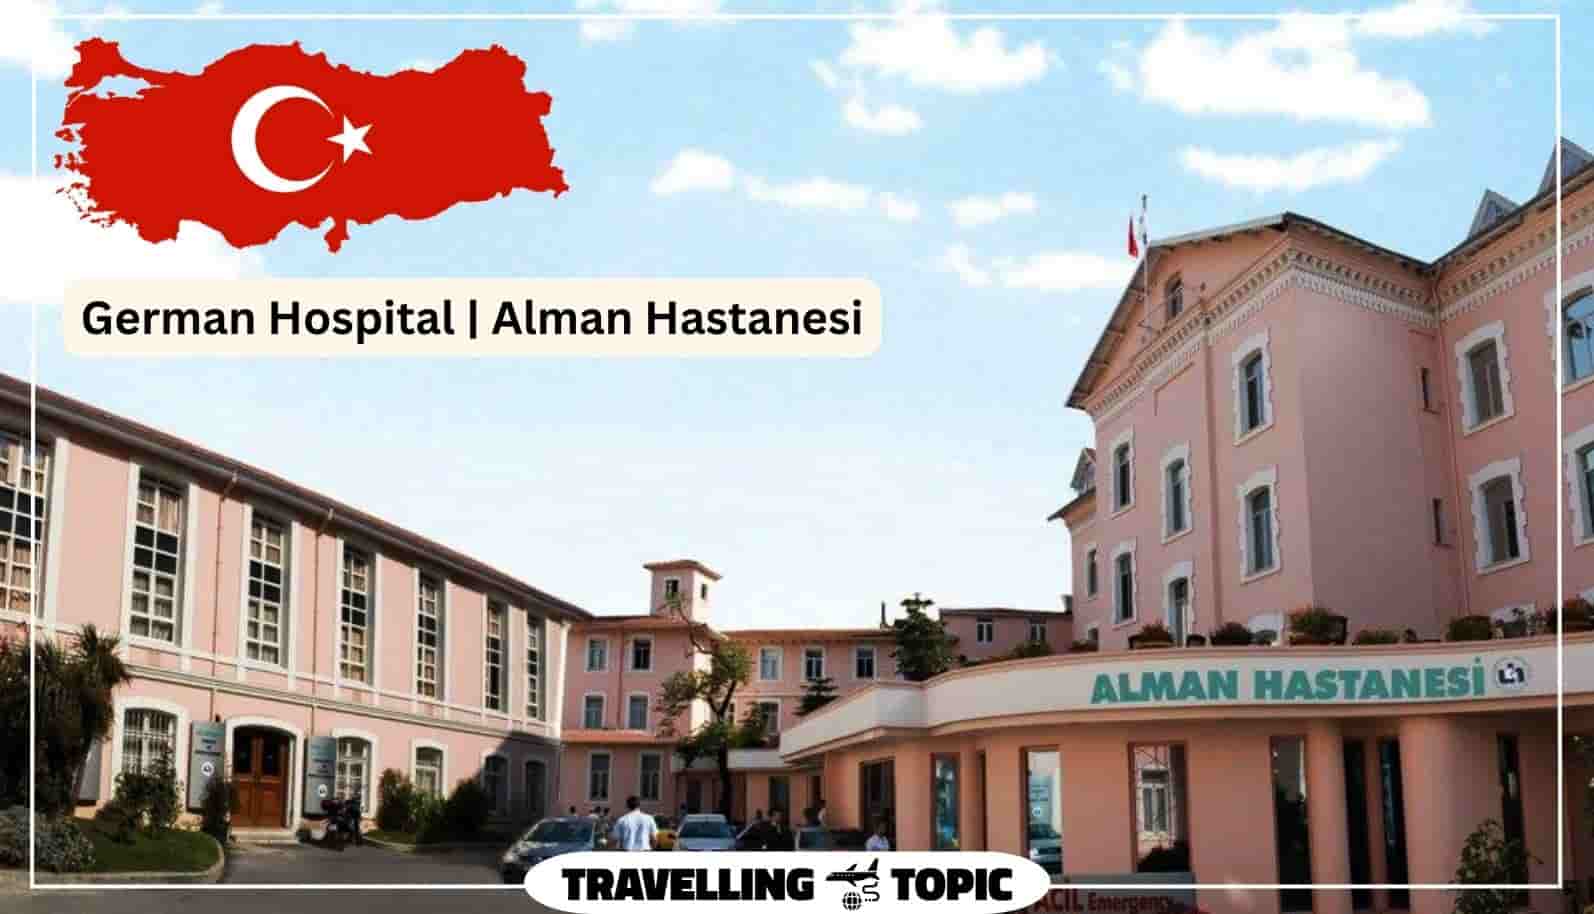 German Hospital Alman Hastanesi